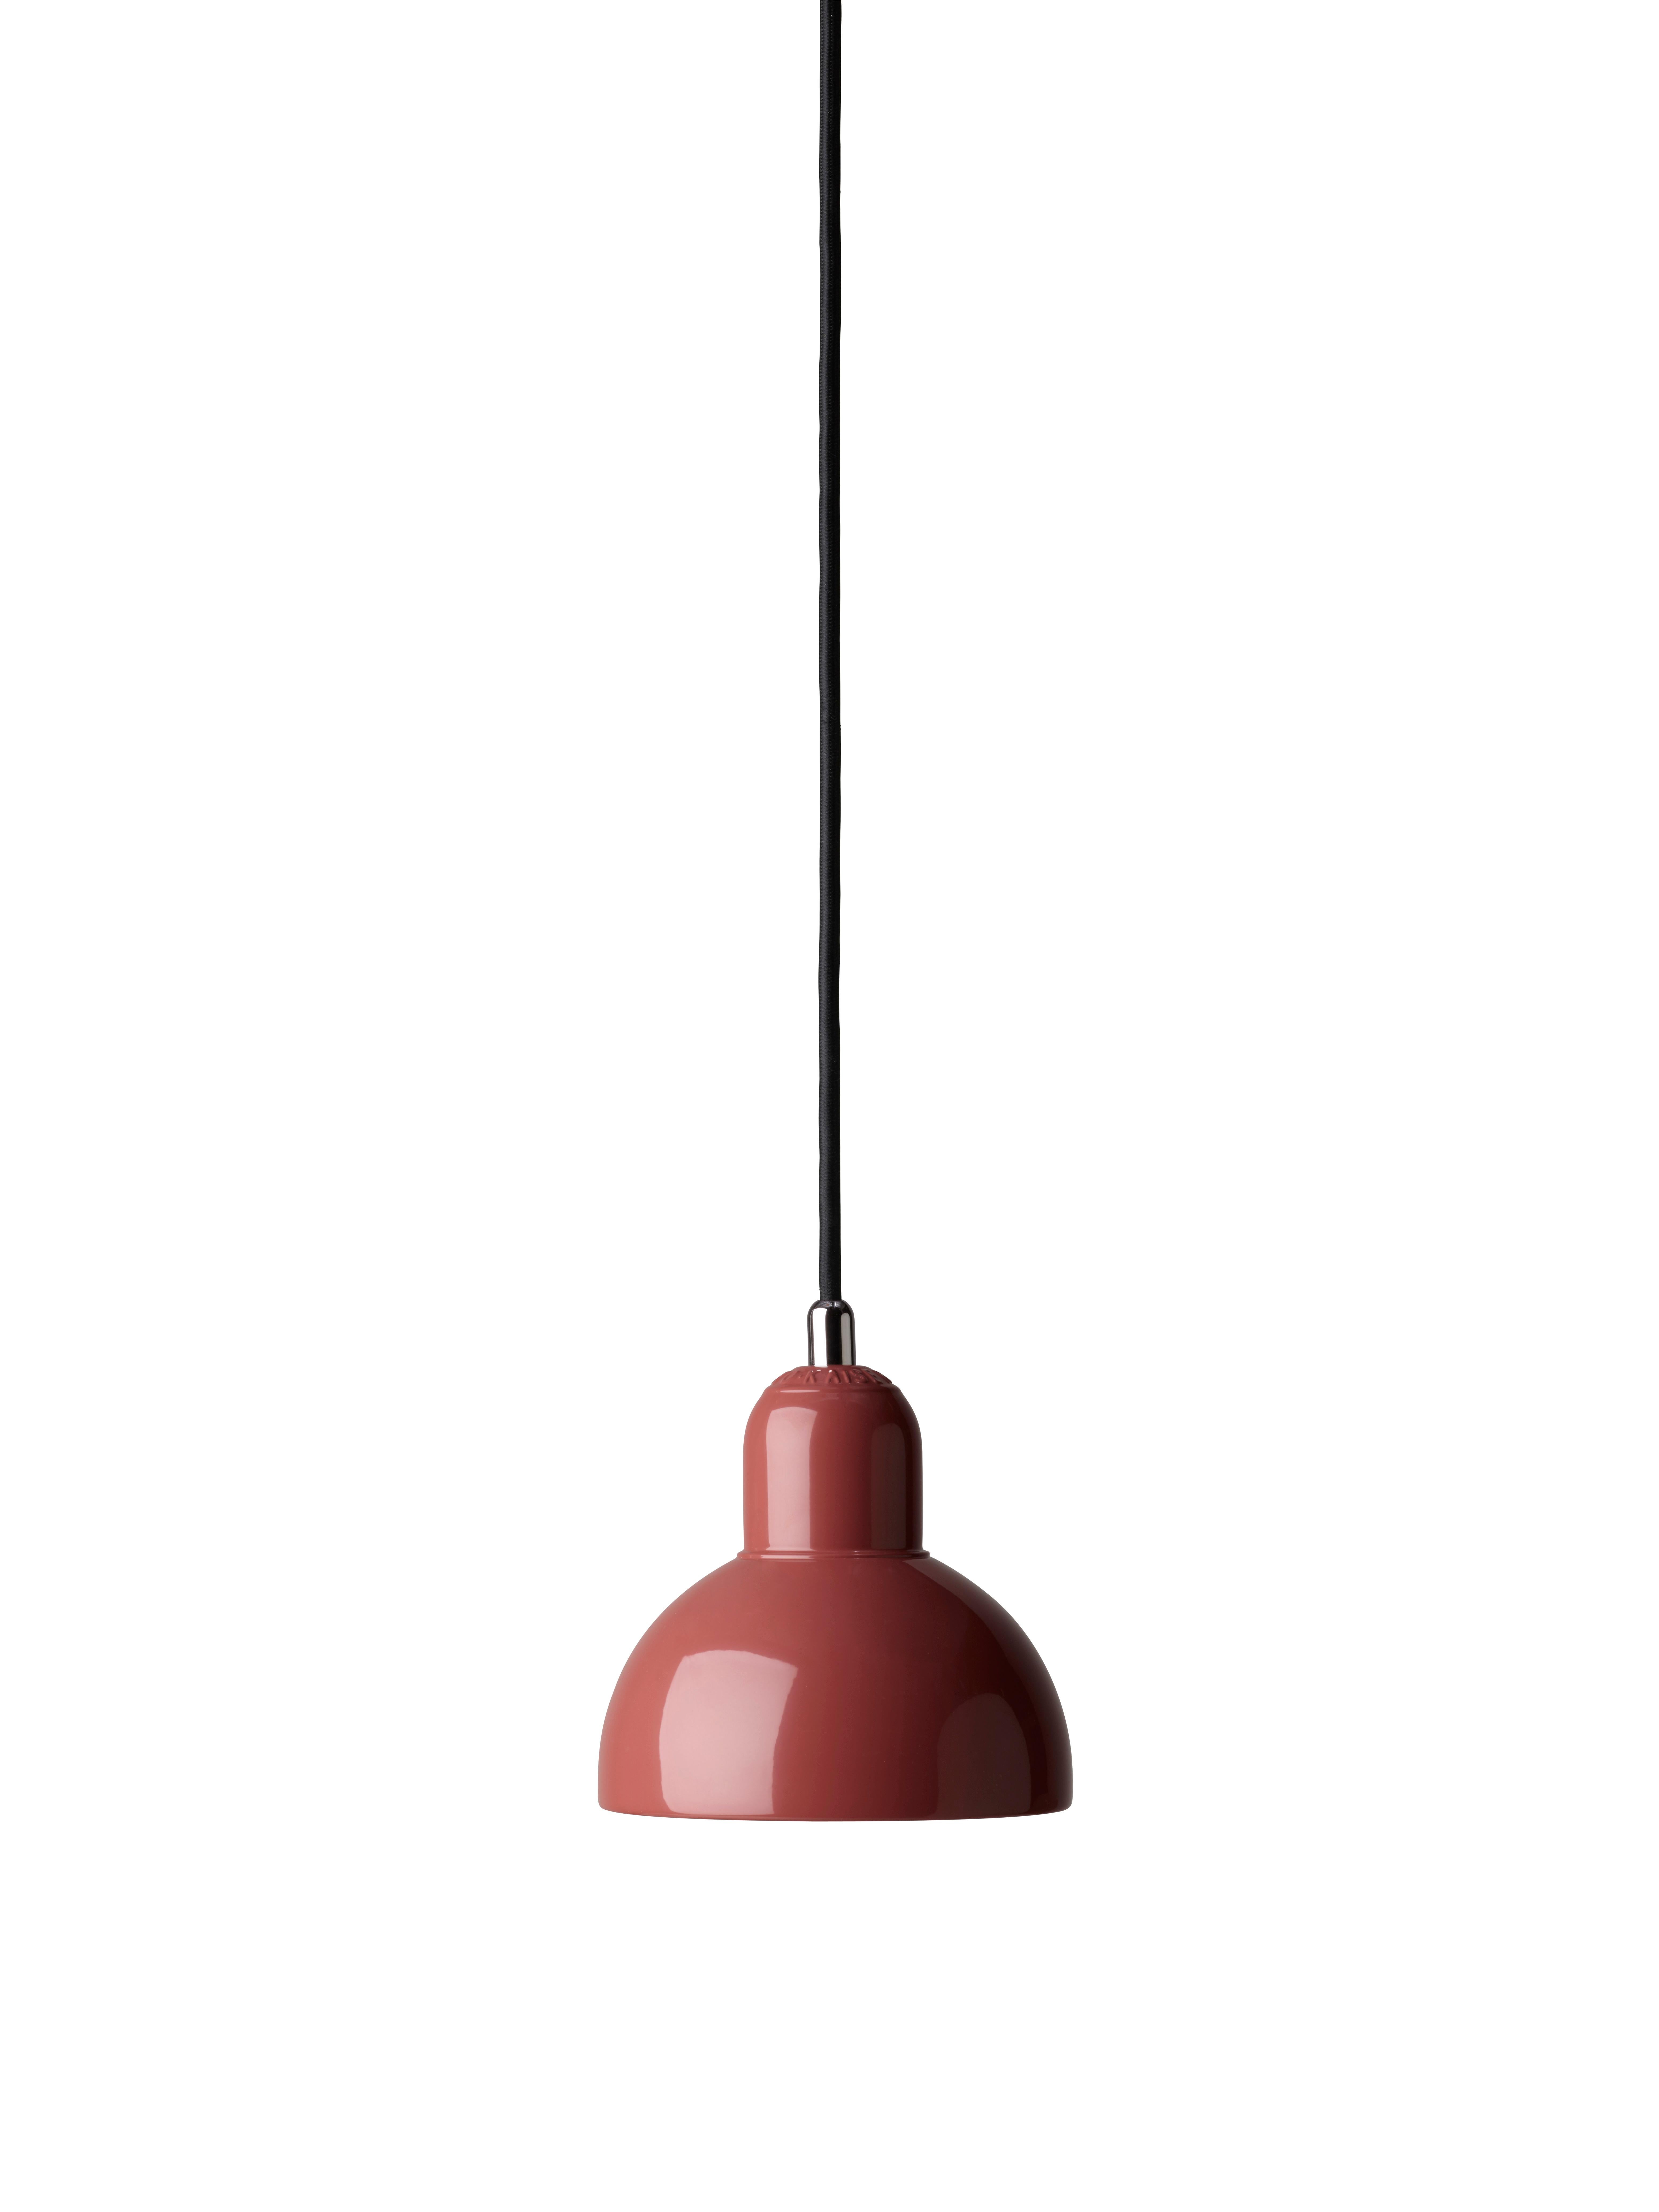 Contemporary Christian Dell 'Kaiser Idell 6722-P' Pendant for Fritz Hansen in Russet Red For Sale